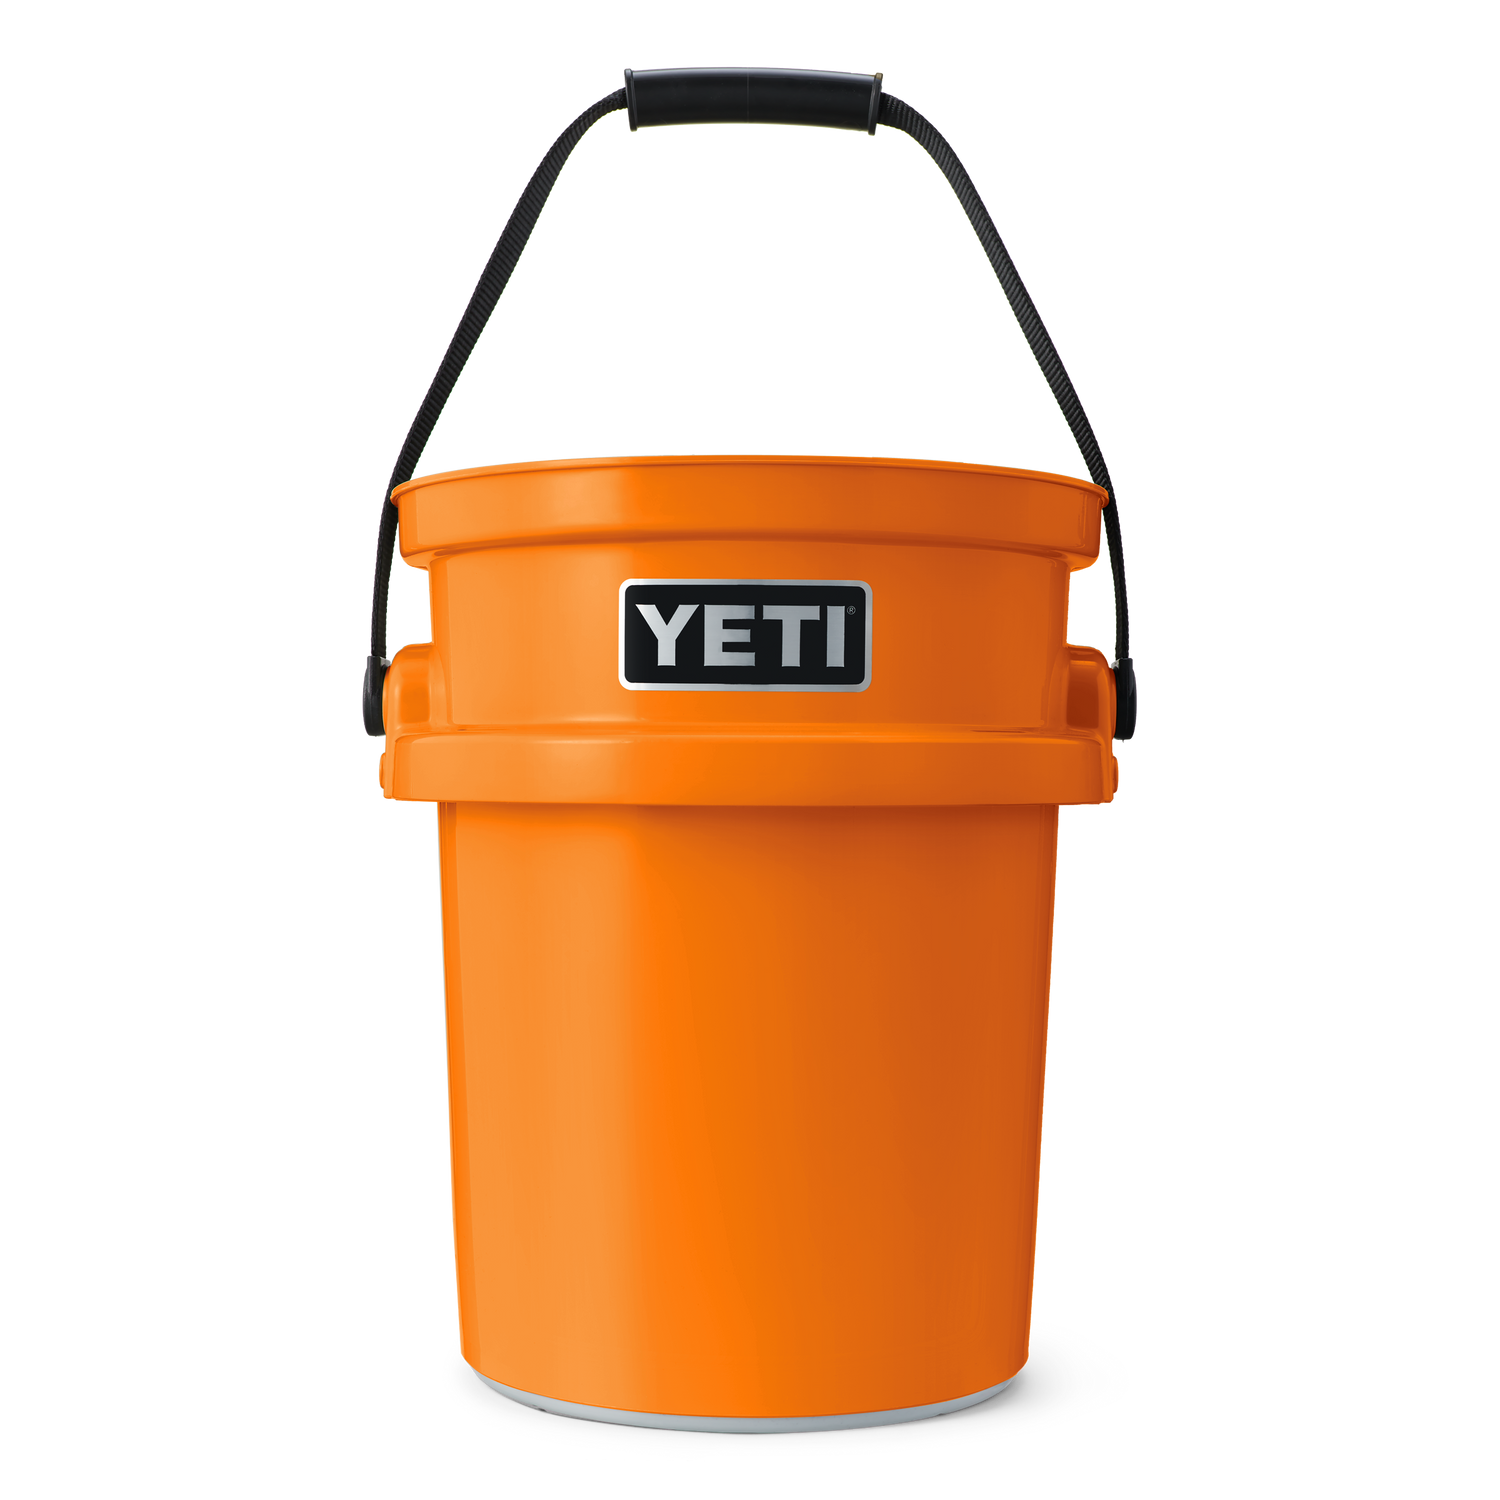 YETI Cargo: Buckets And Gear Cases – YETI EUROPE